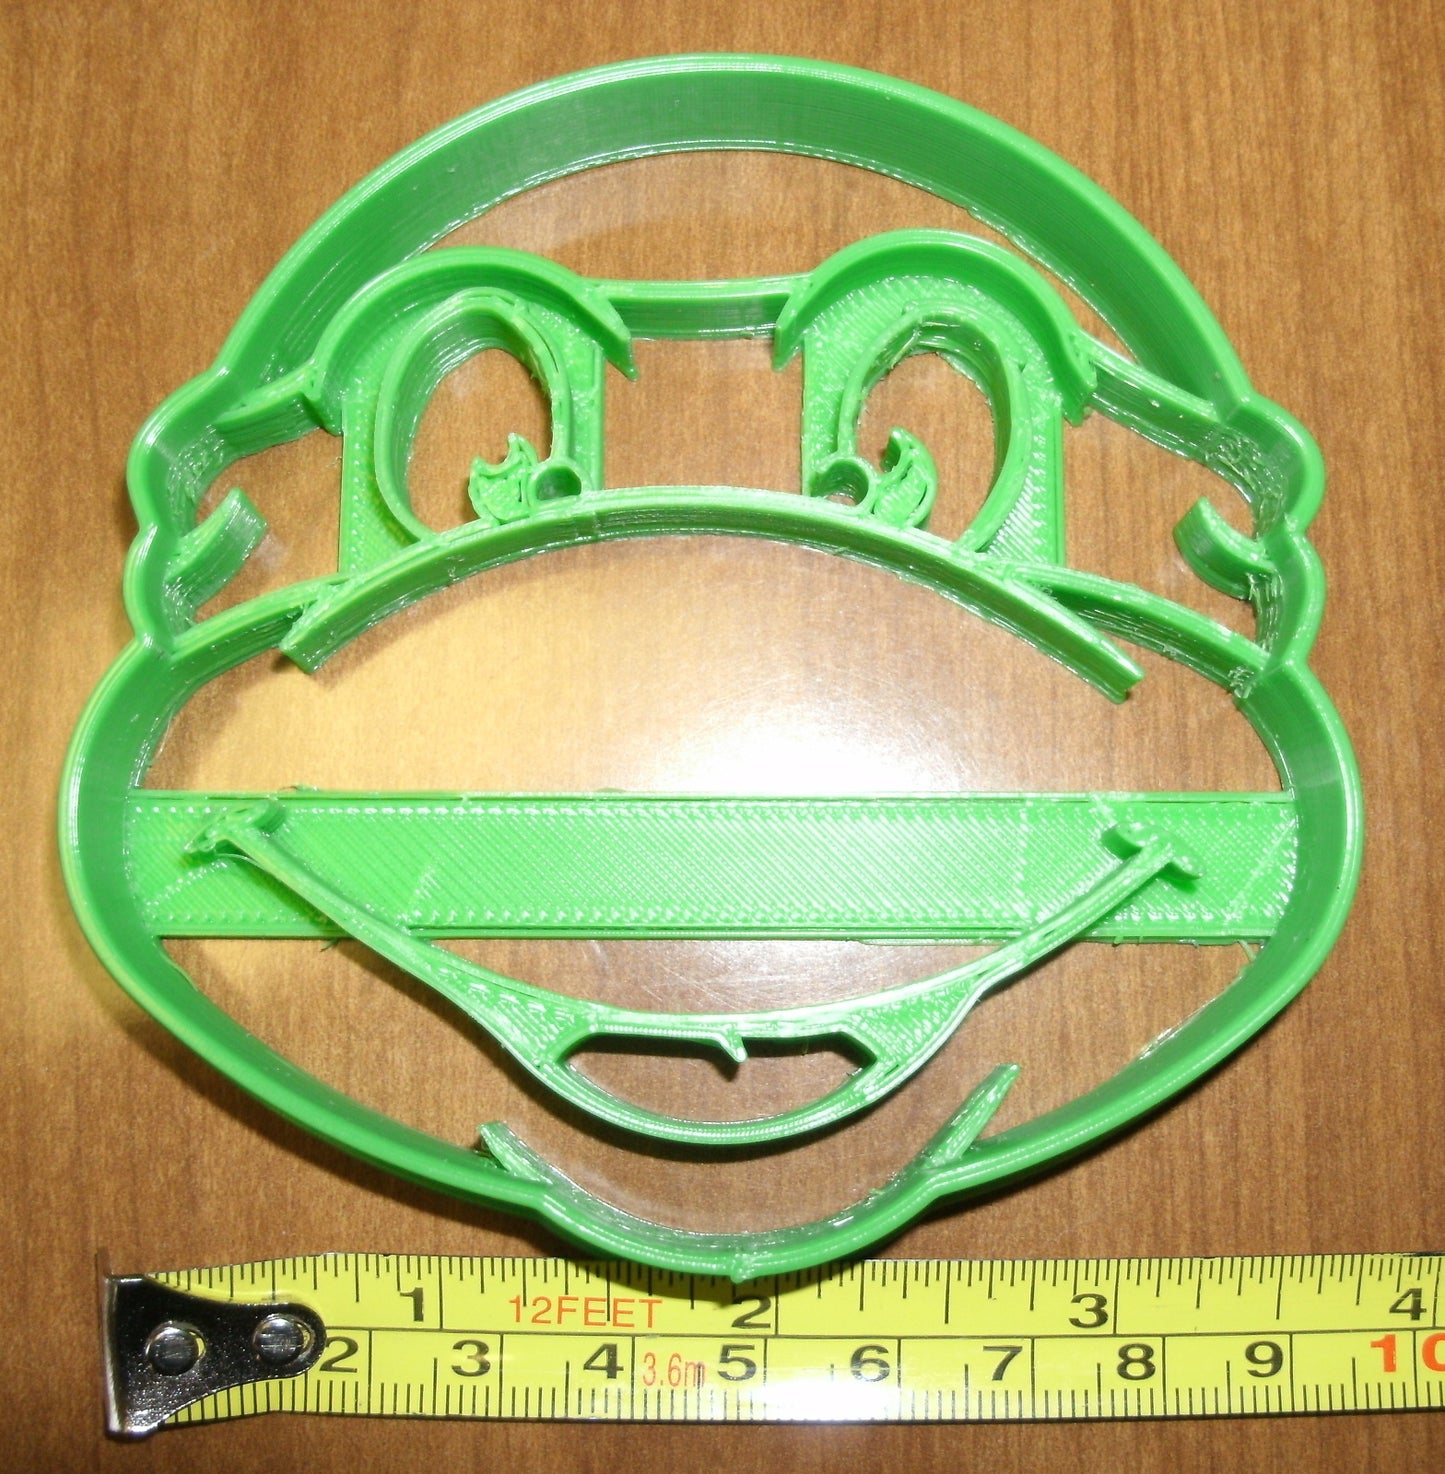 TMNT Teenage Mutant Ninja Turtle Face Cookie Cutter Made in USA PR484